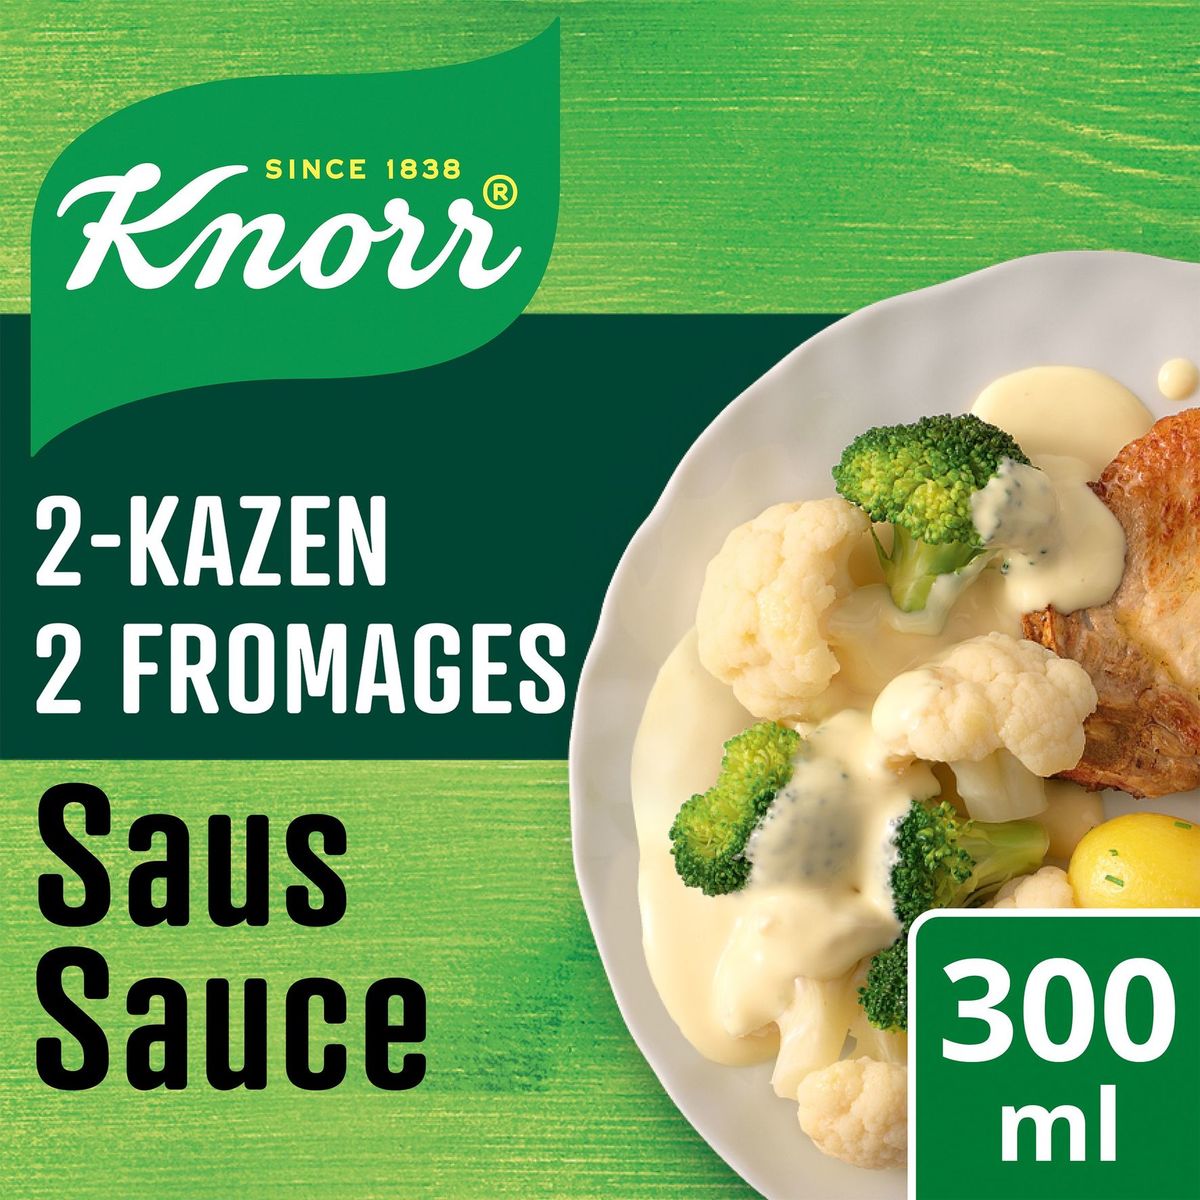 Knorr Culinair 2-Kazensaus 300 ml